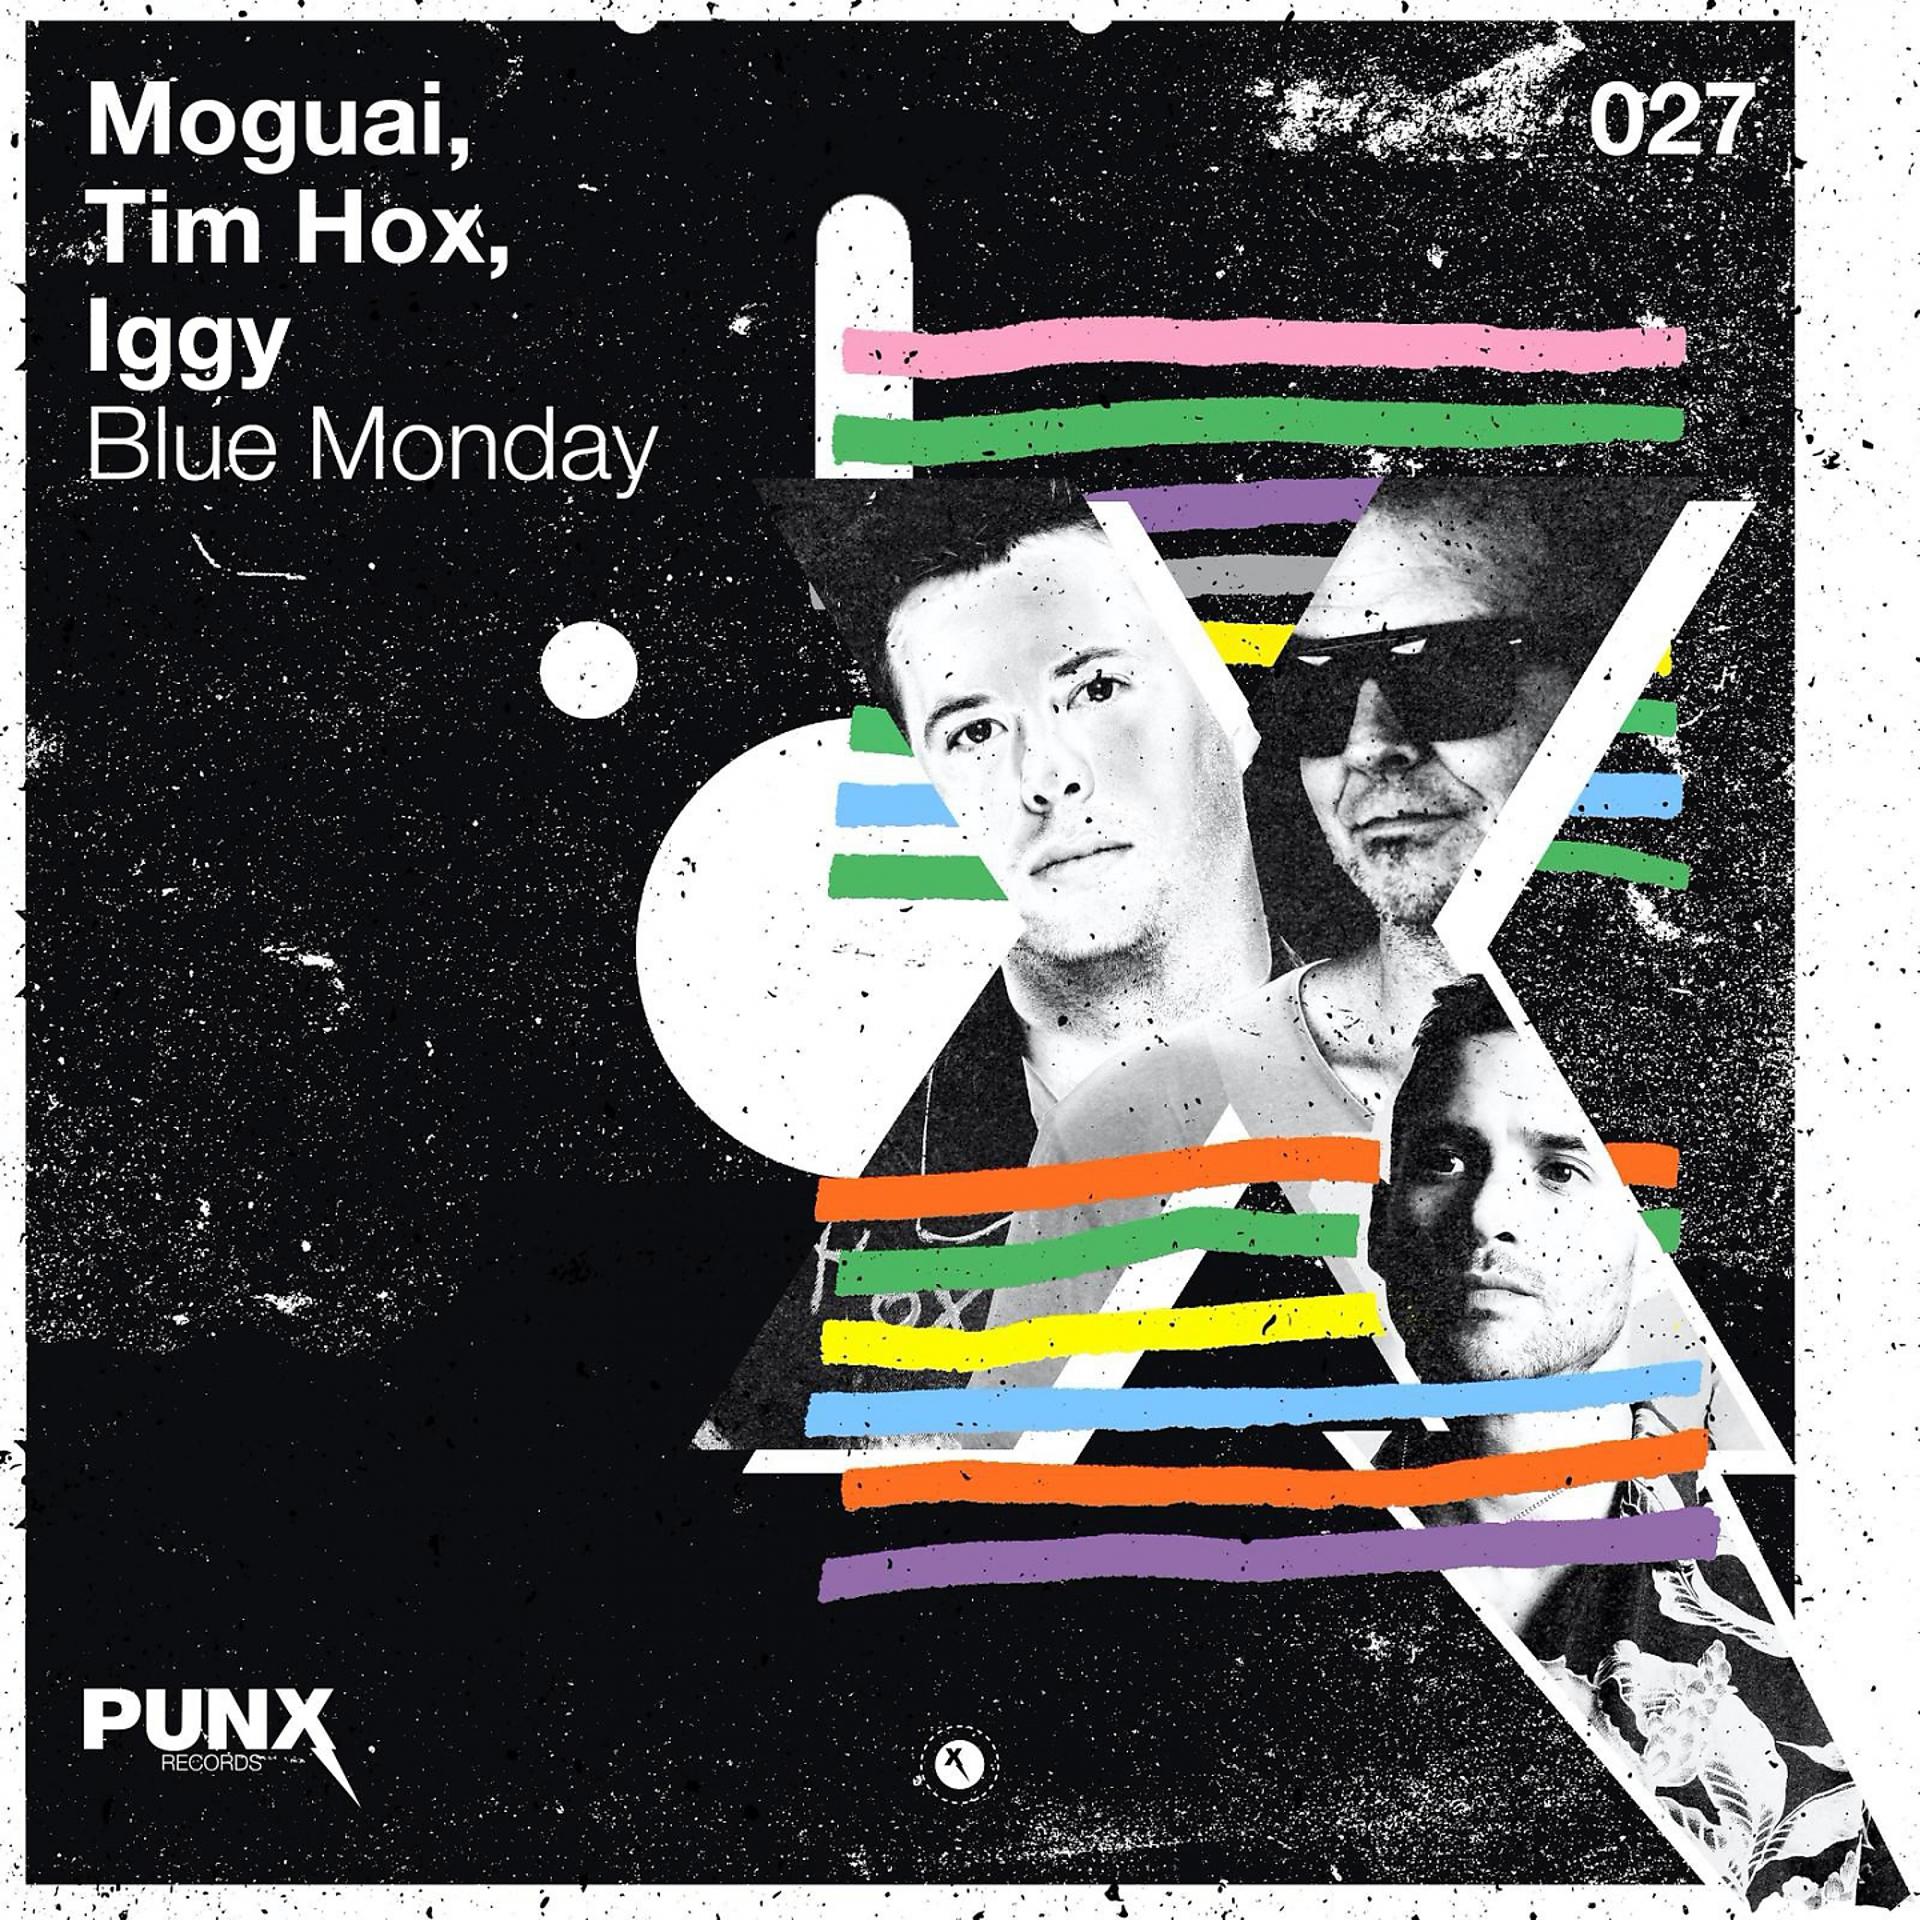 Постер к треку Moguai, Tim Hox, Iggy - Blue Monday